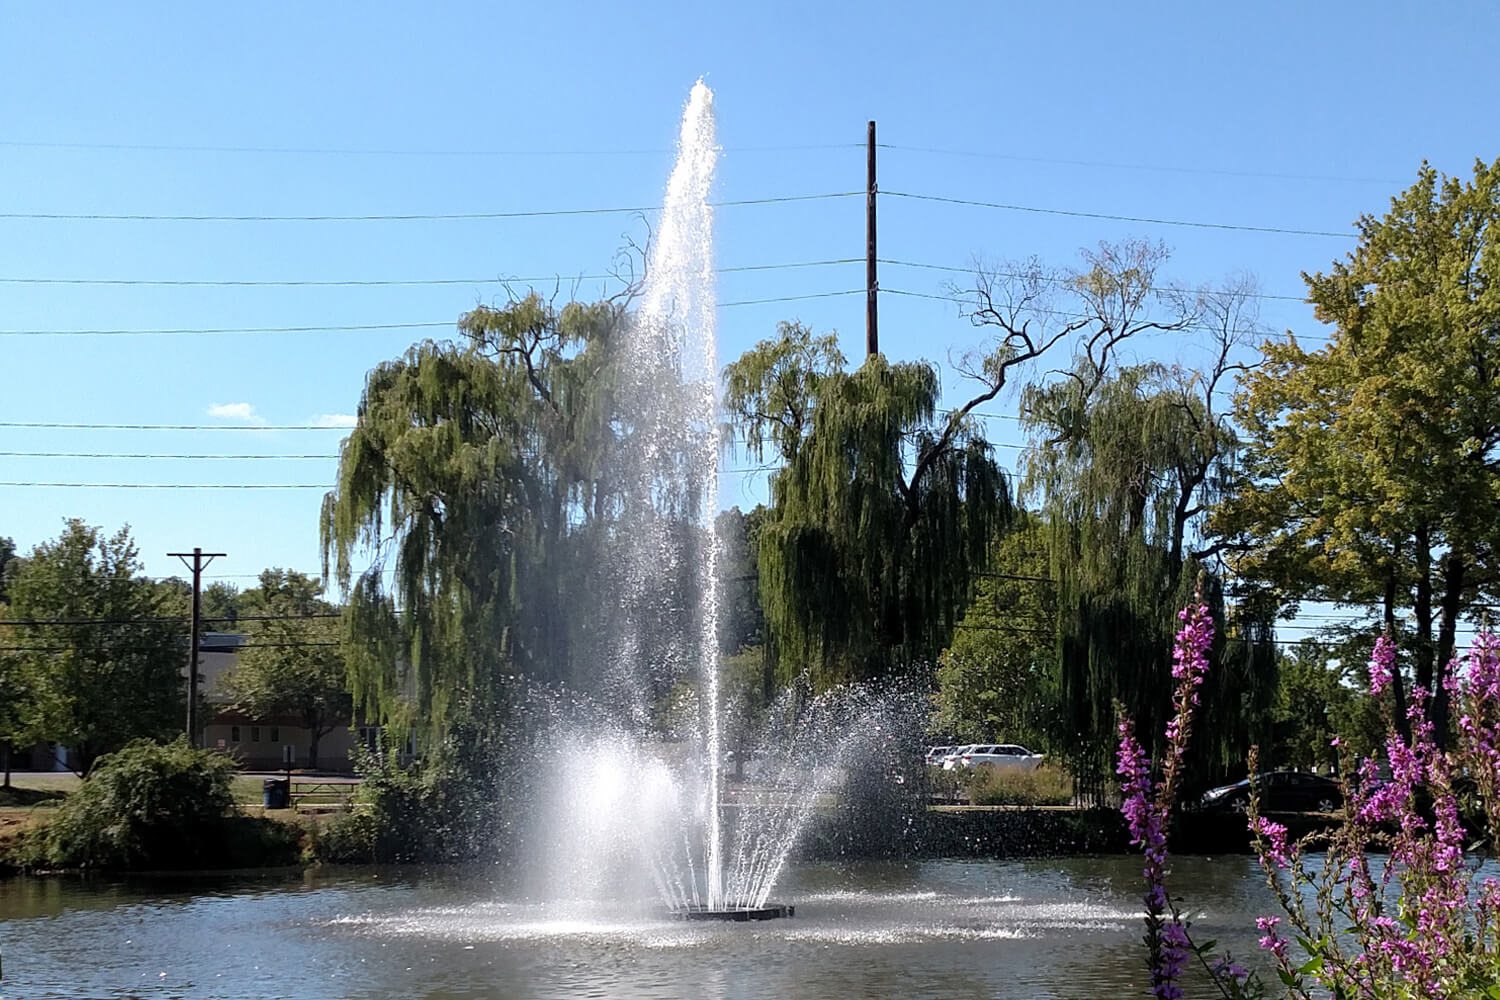 One of Otterbine's Aqua Star Aerating Fountains